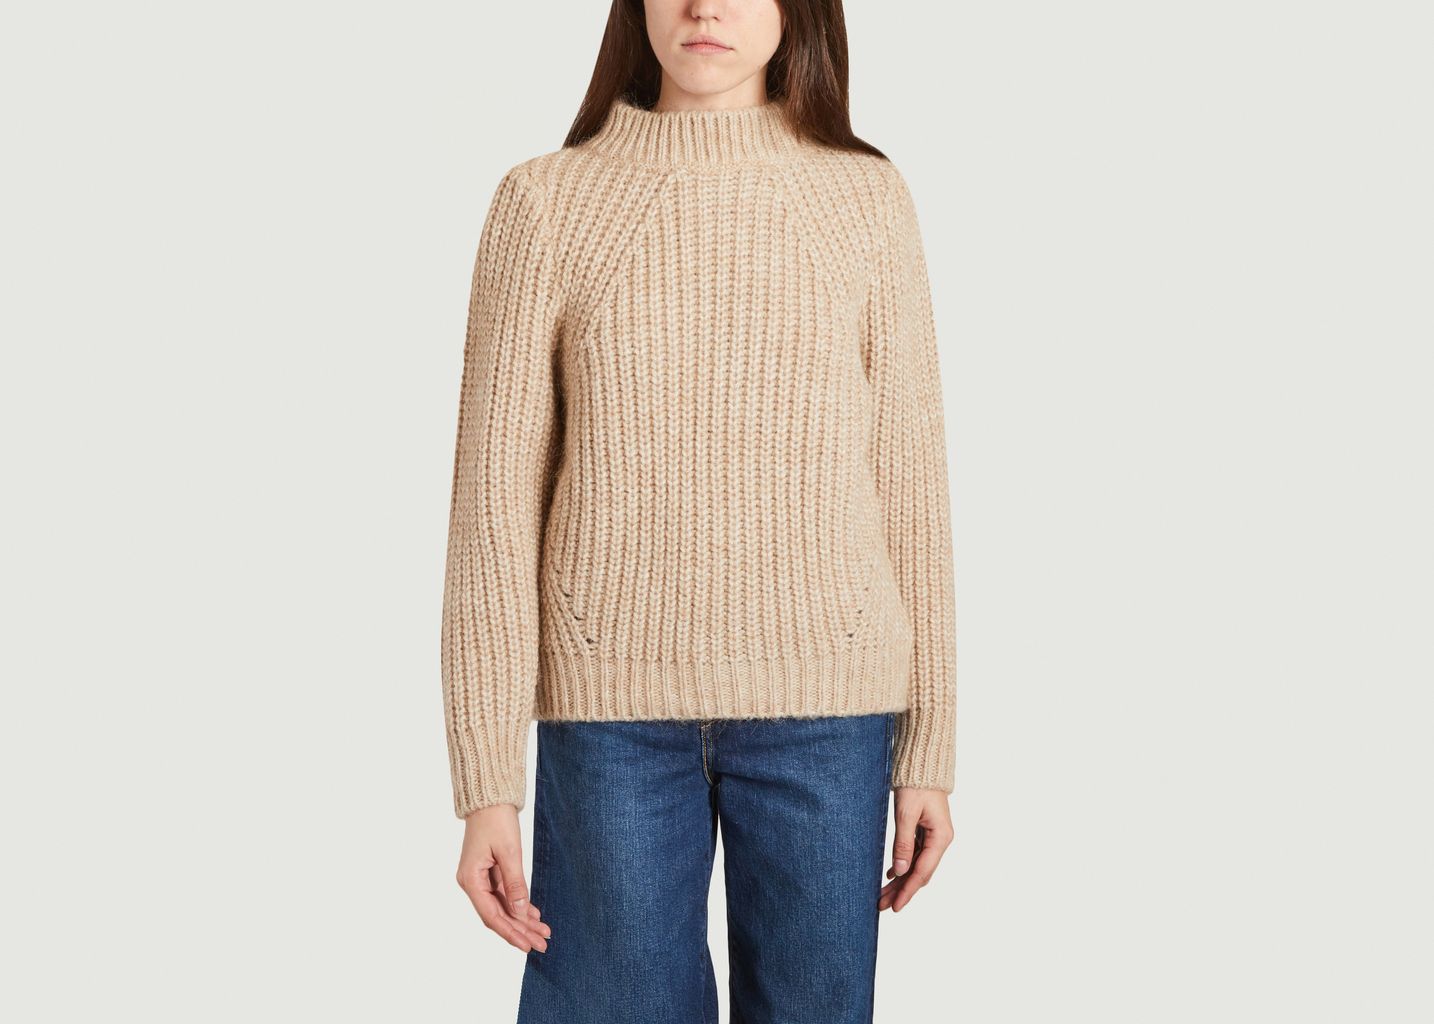 Liosa sweater - Jolie Jolie